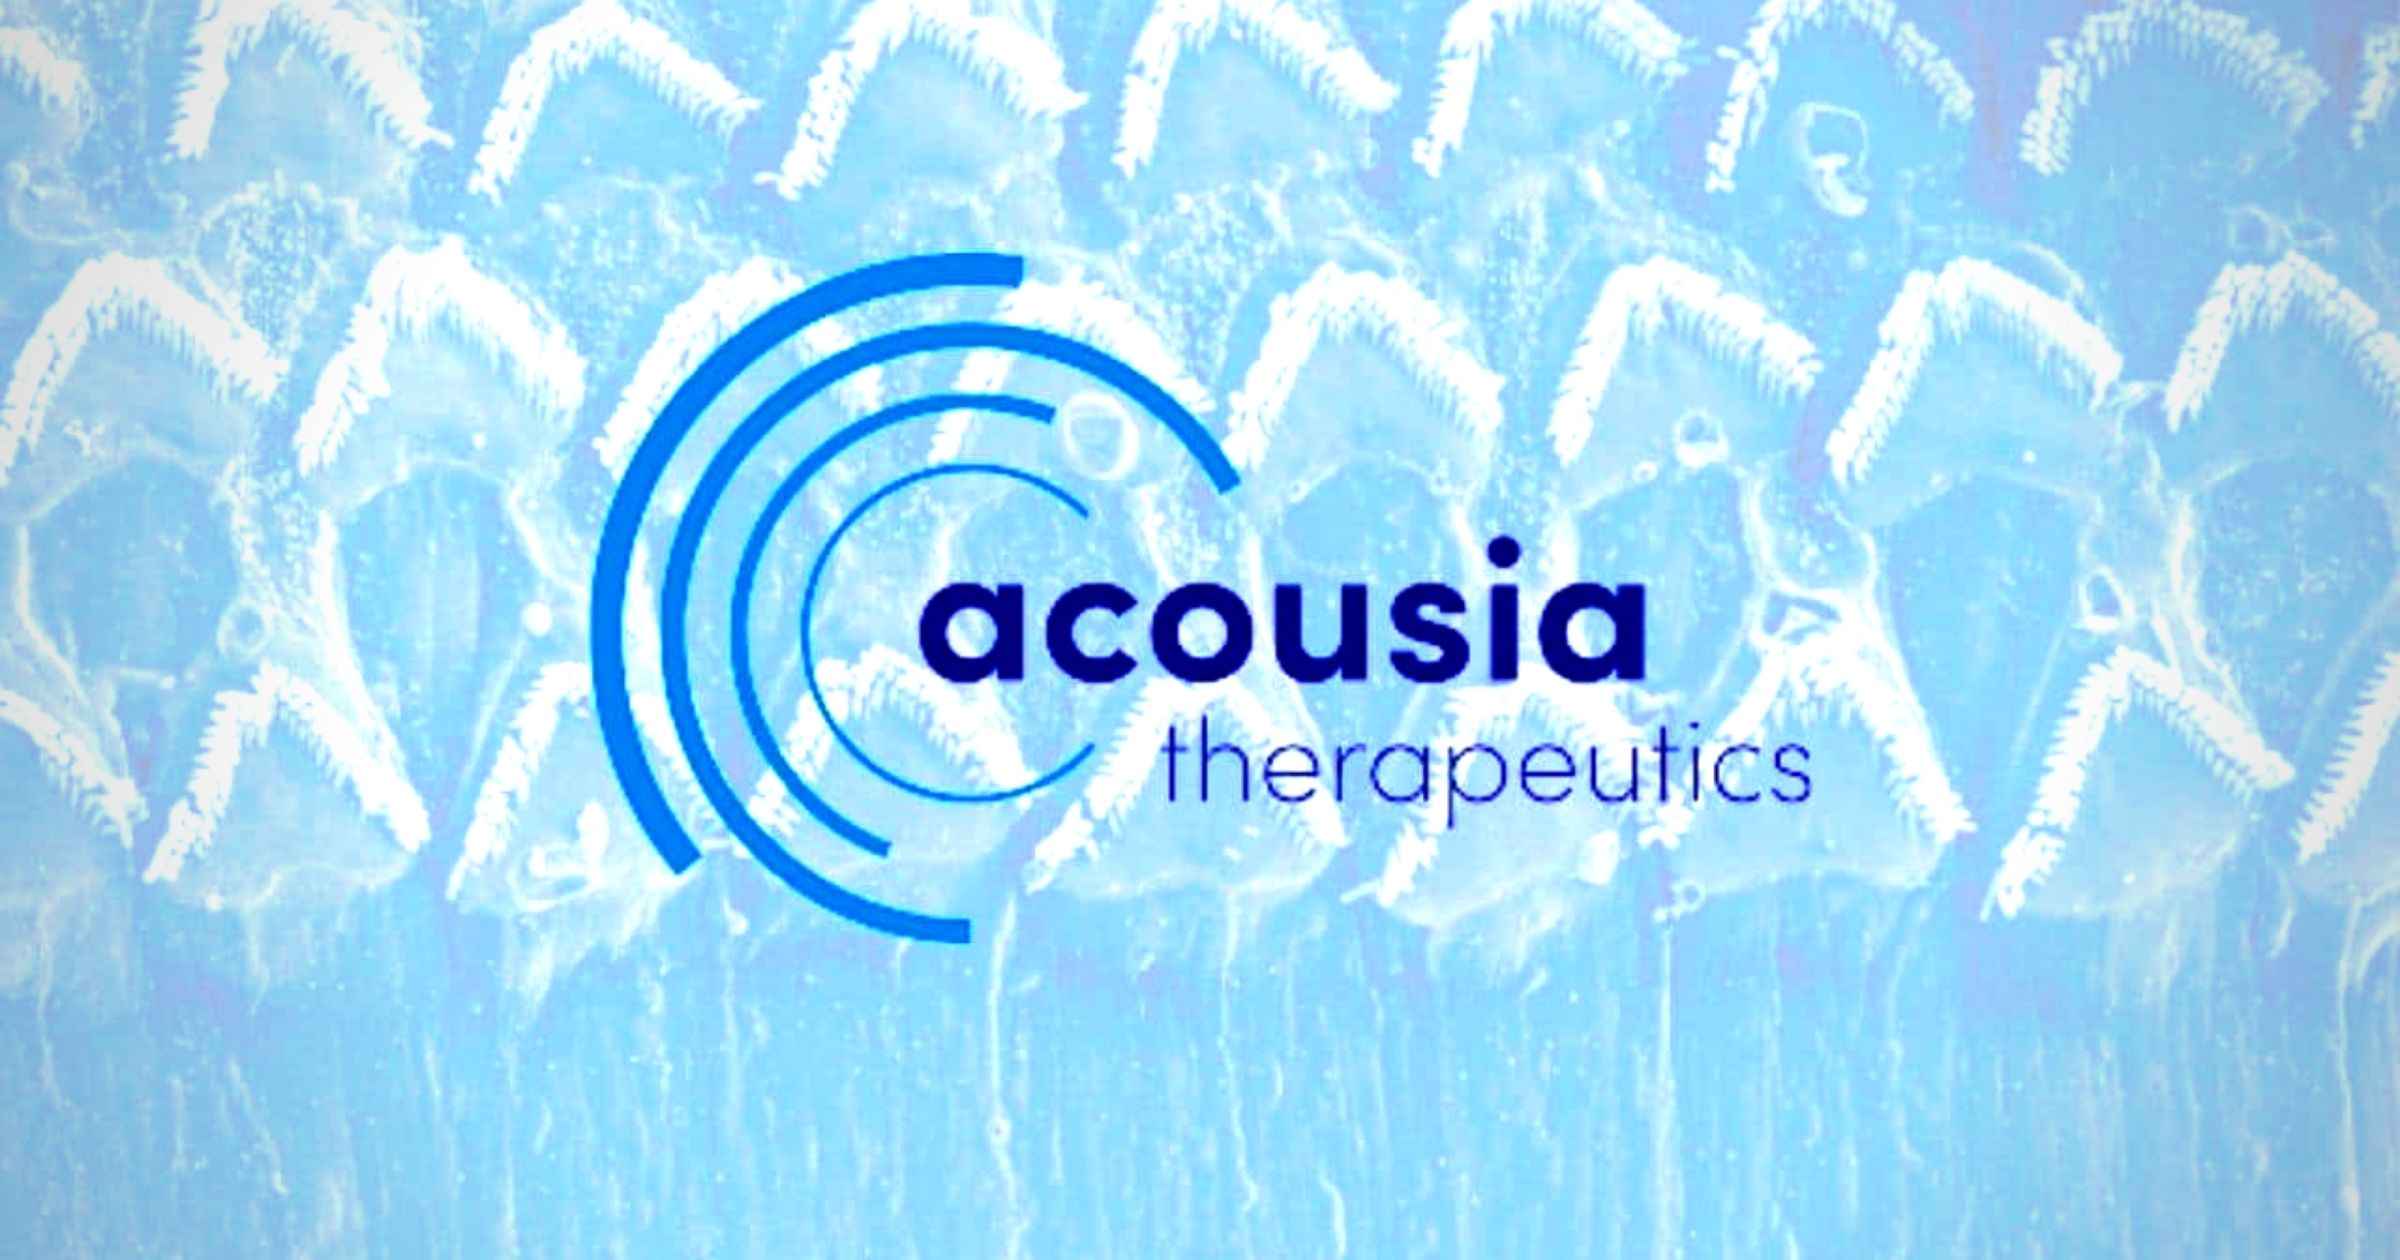 acousia therapeutics hearing loss treatment chemotherapy